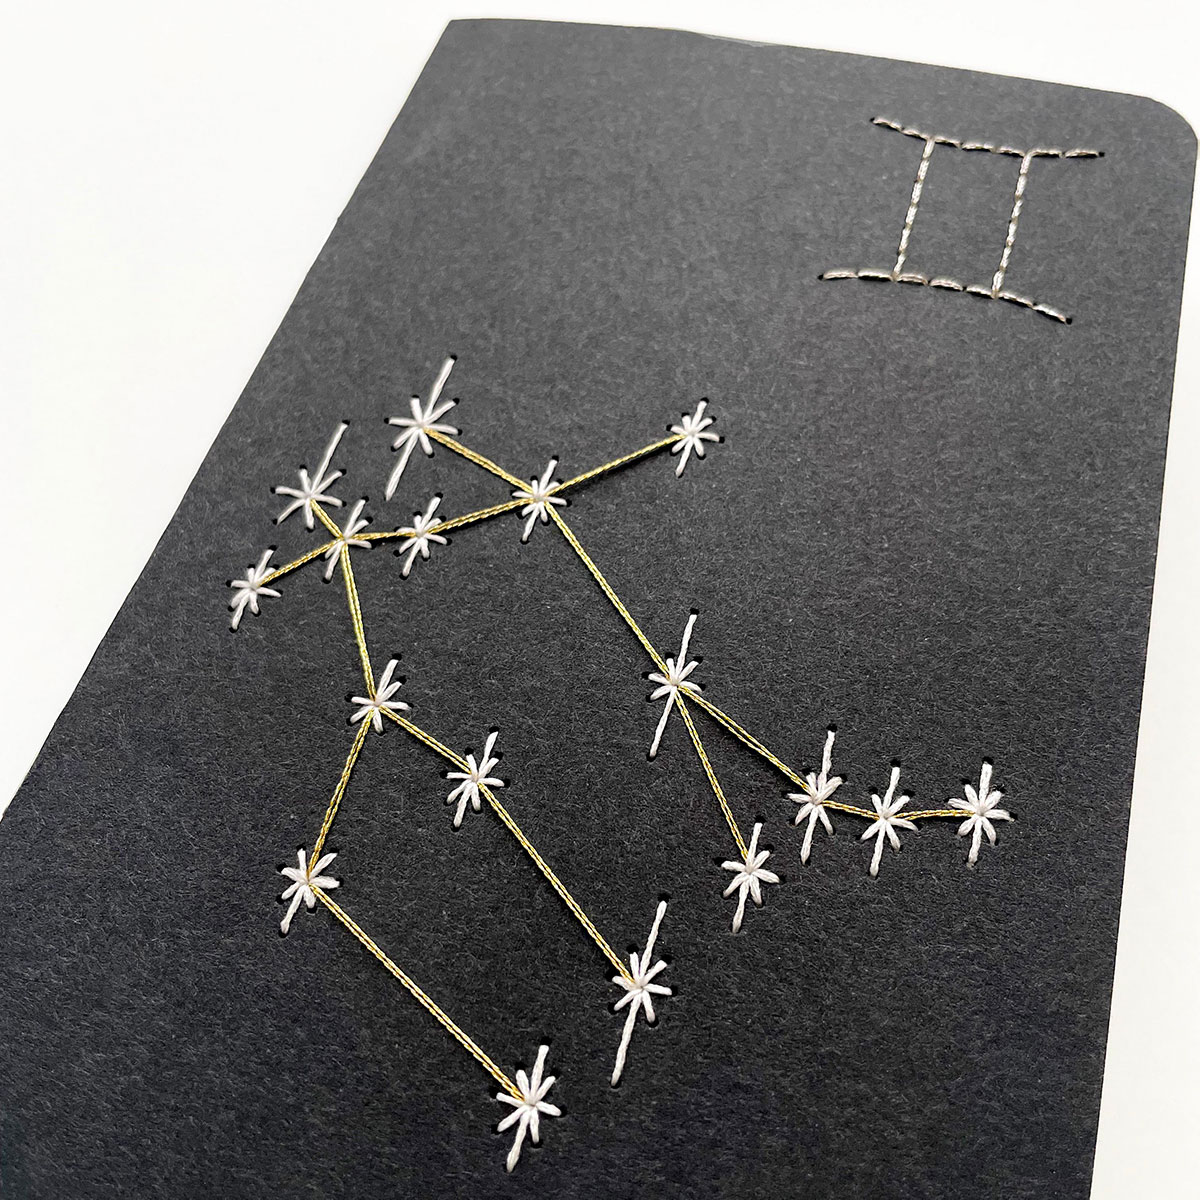 Gemini constellation paper embroidery by Mayuka Fiber Art - Maydel